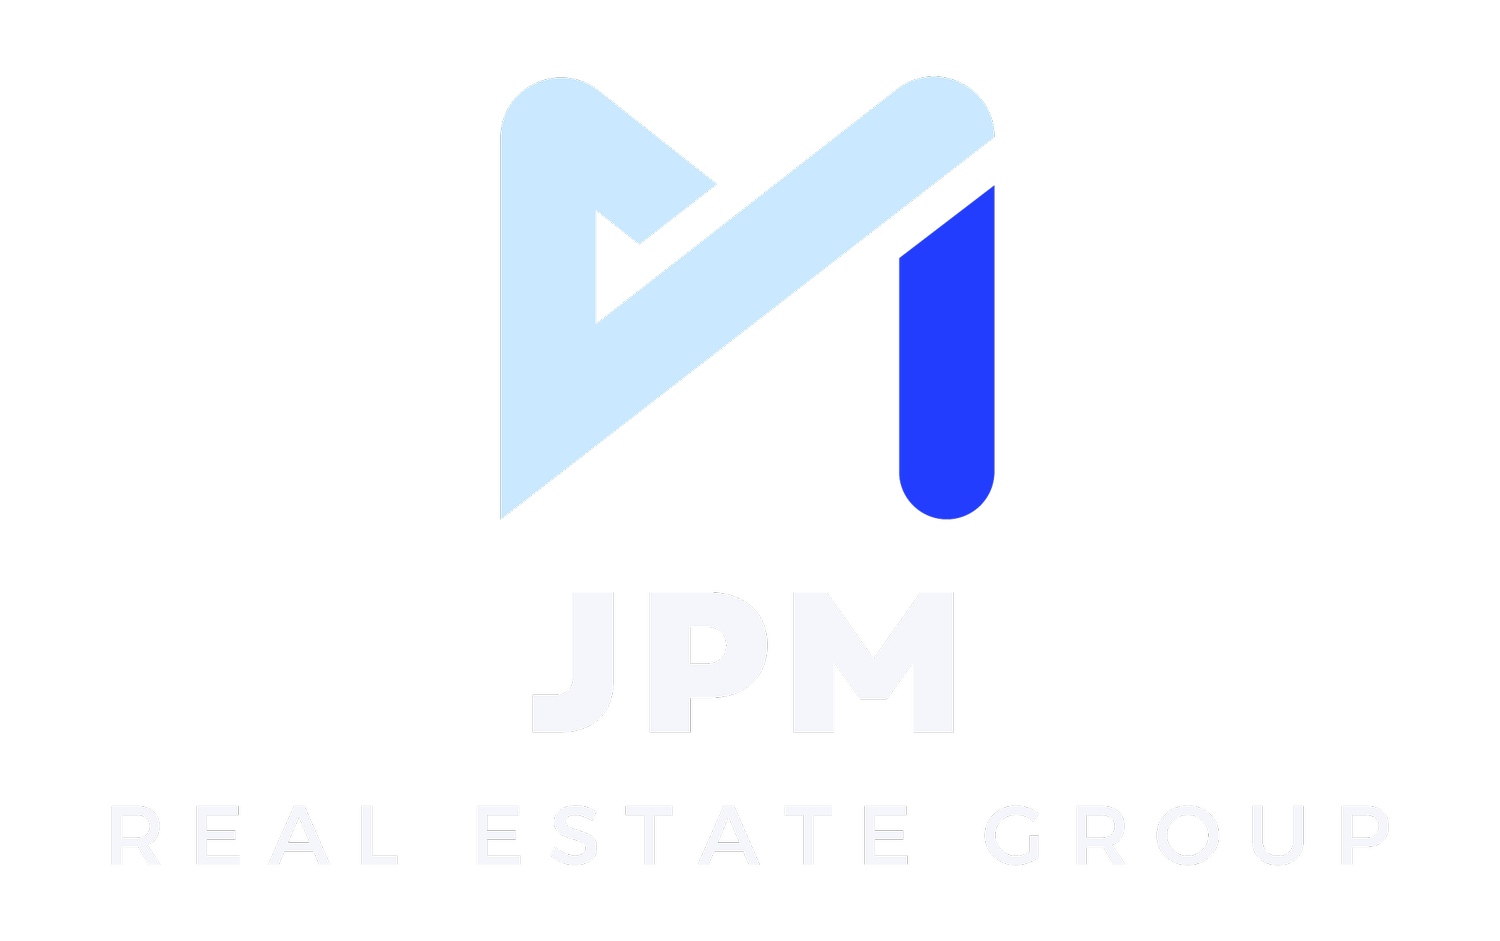 JPM Real Estate Group